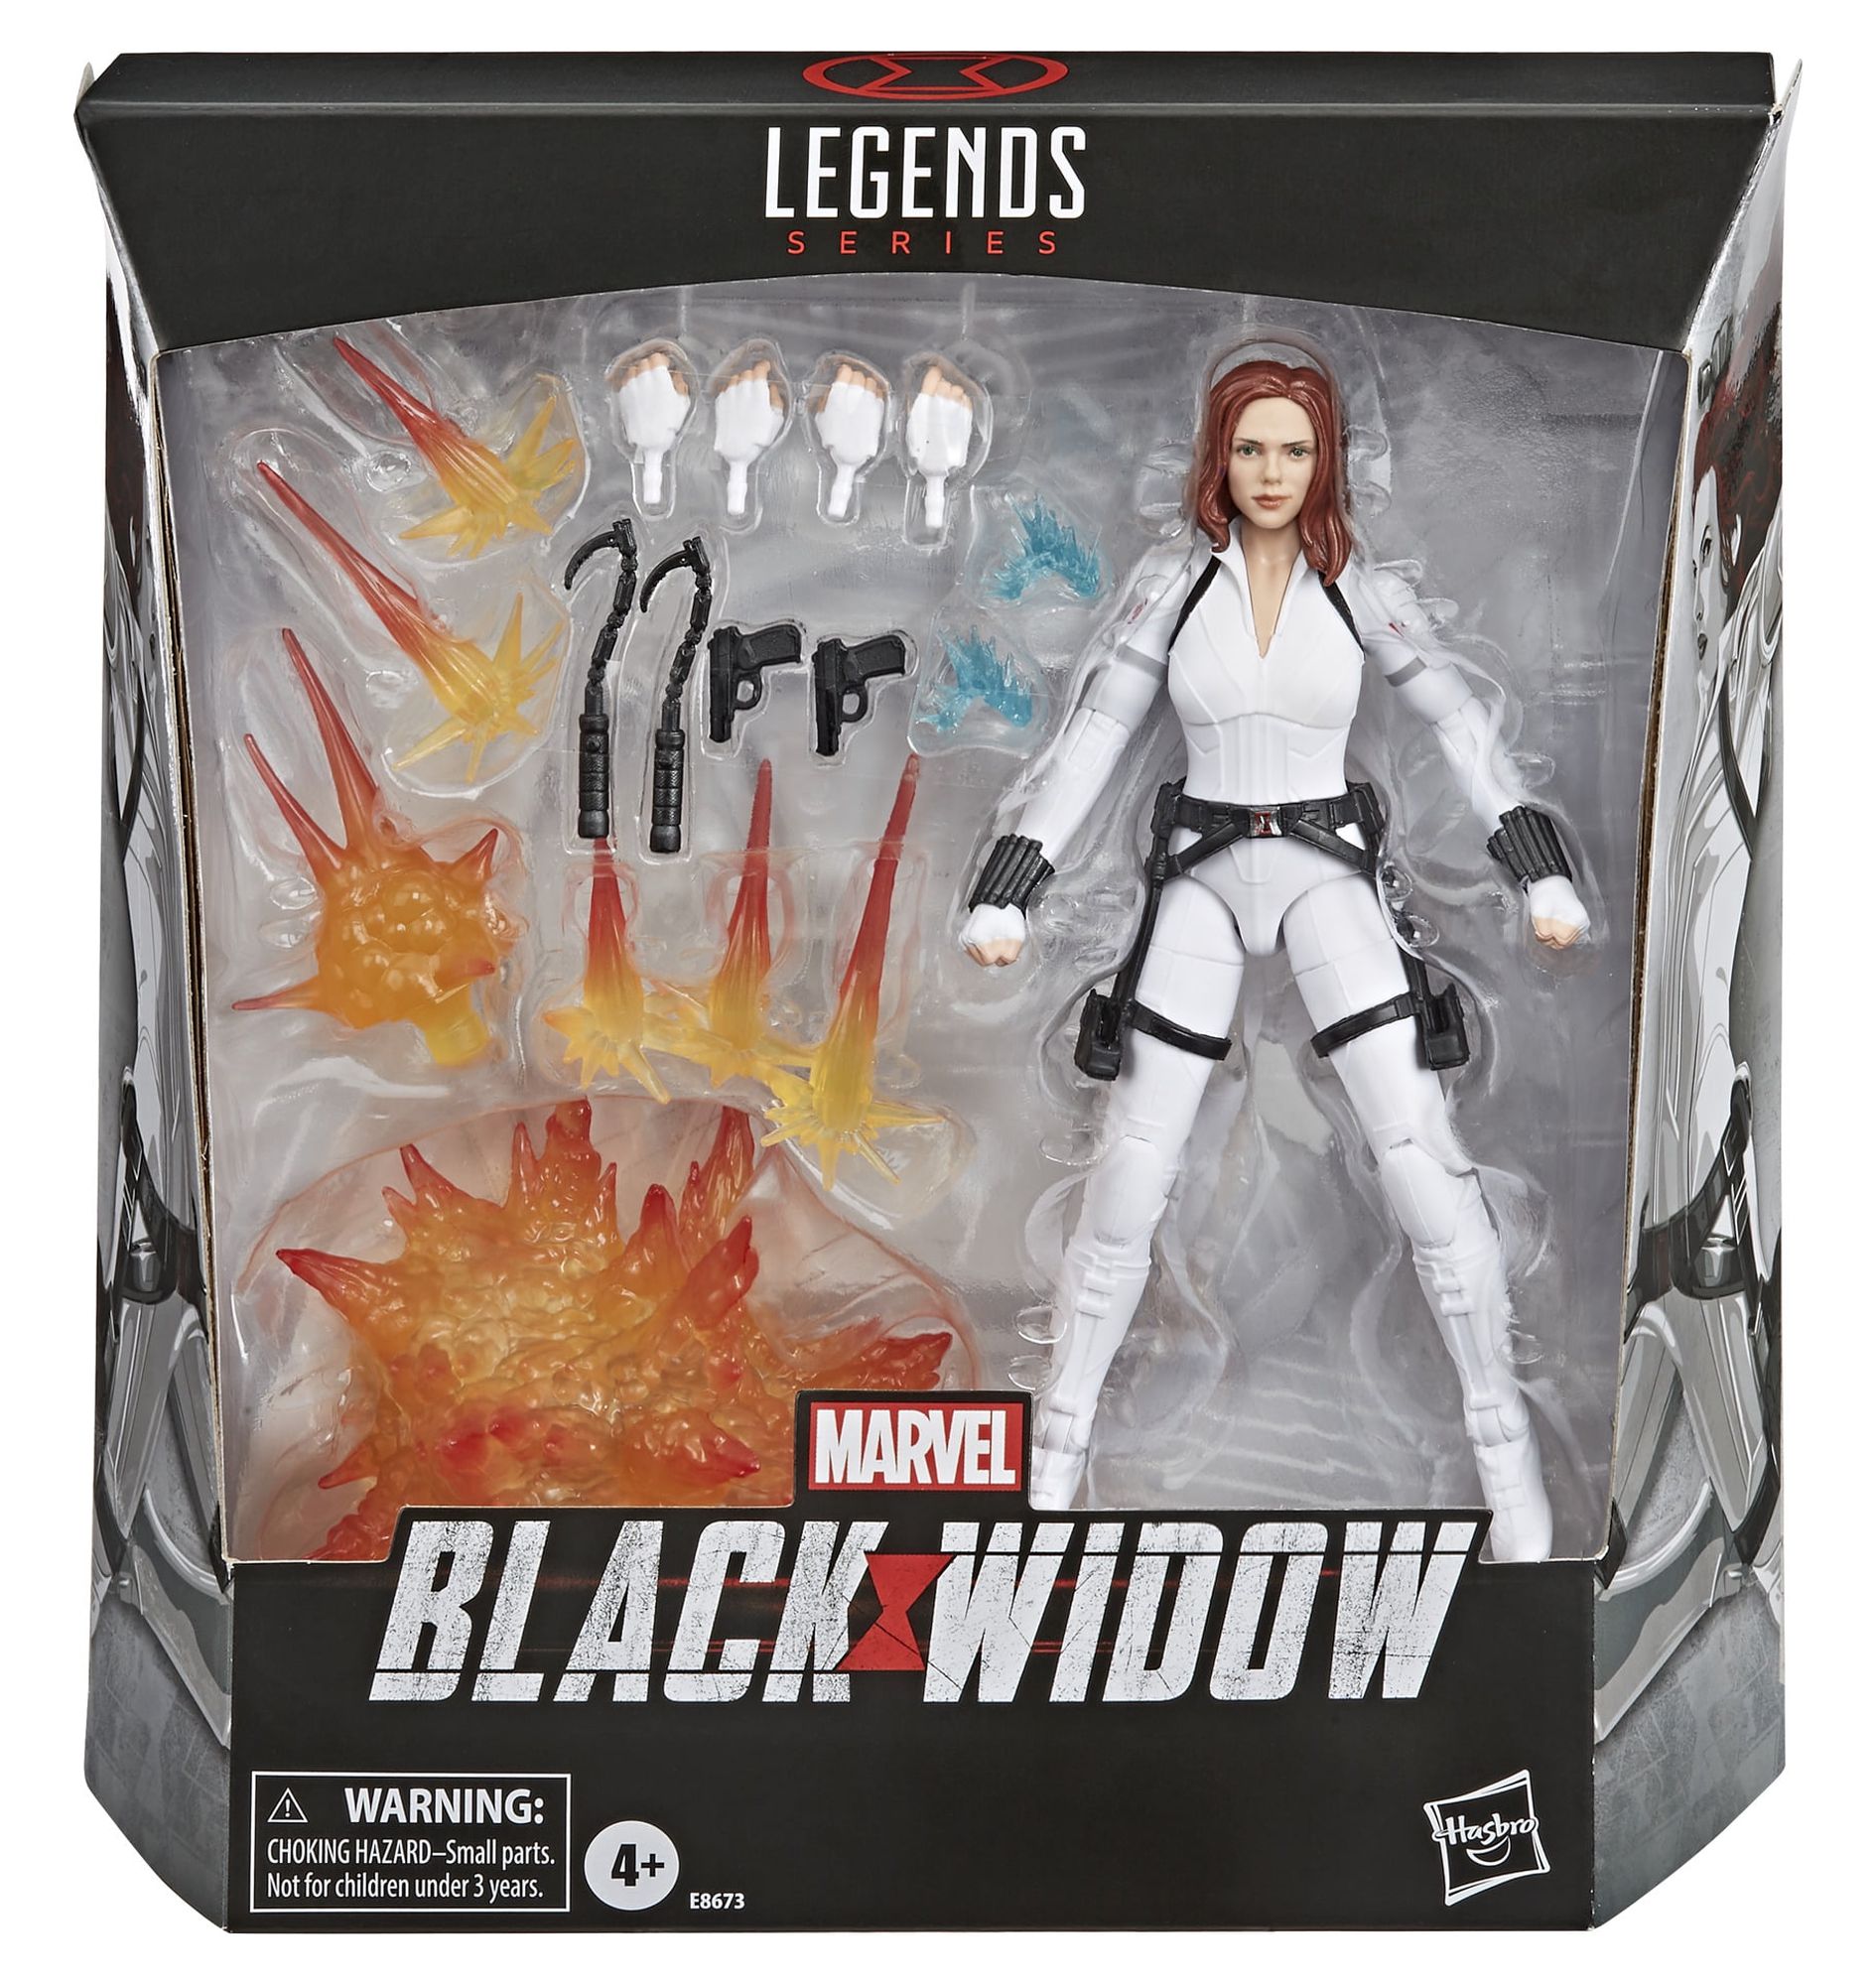 Hasbro Marvel Black Widow Legends Series Black Widow - image 2 of 5